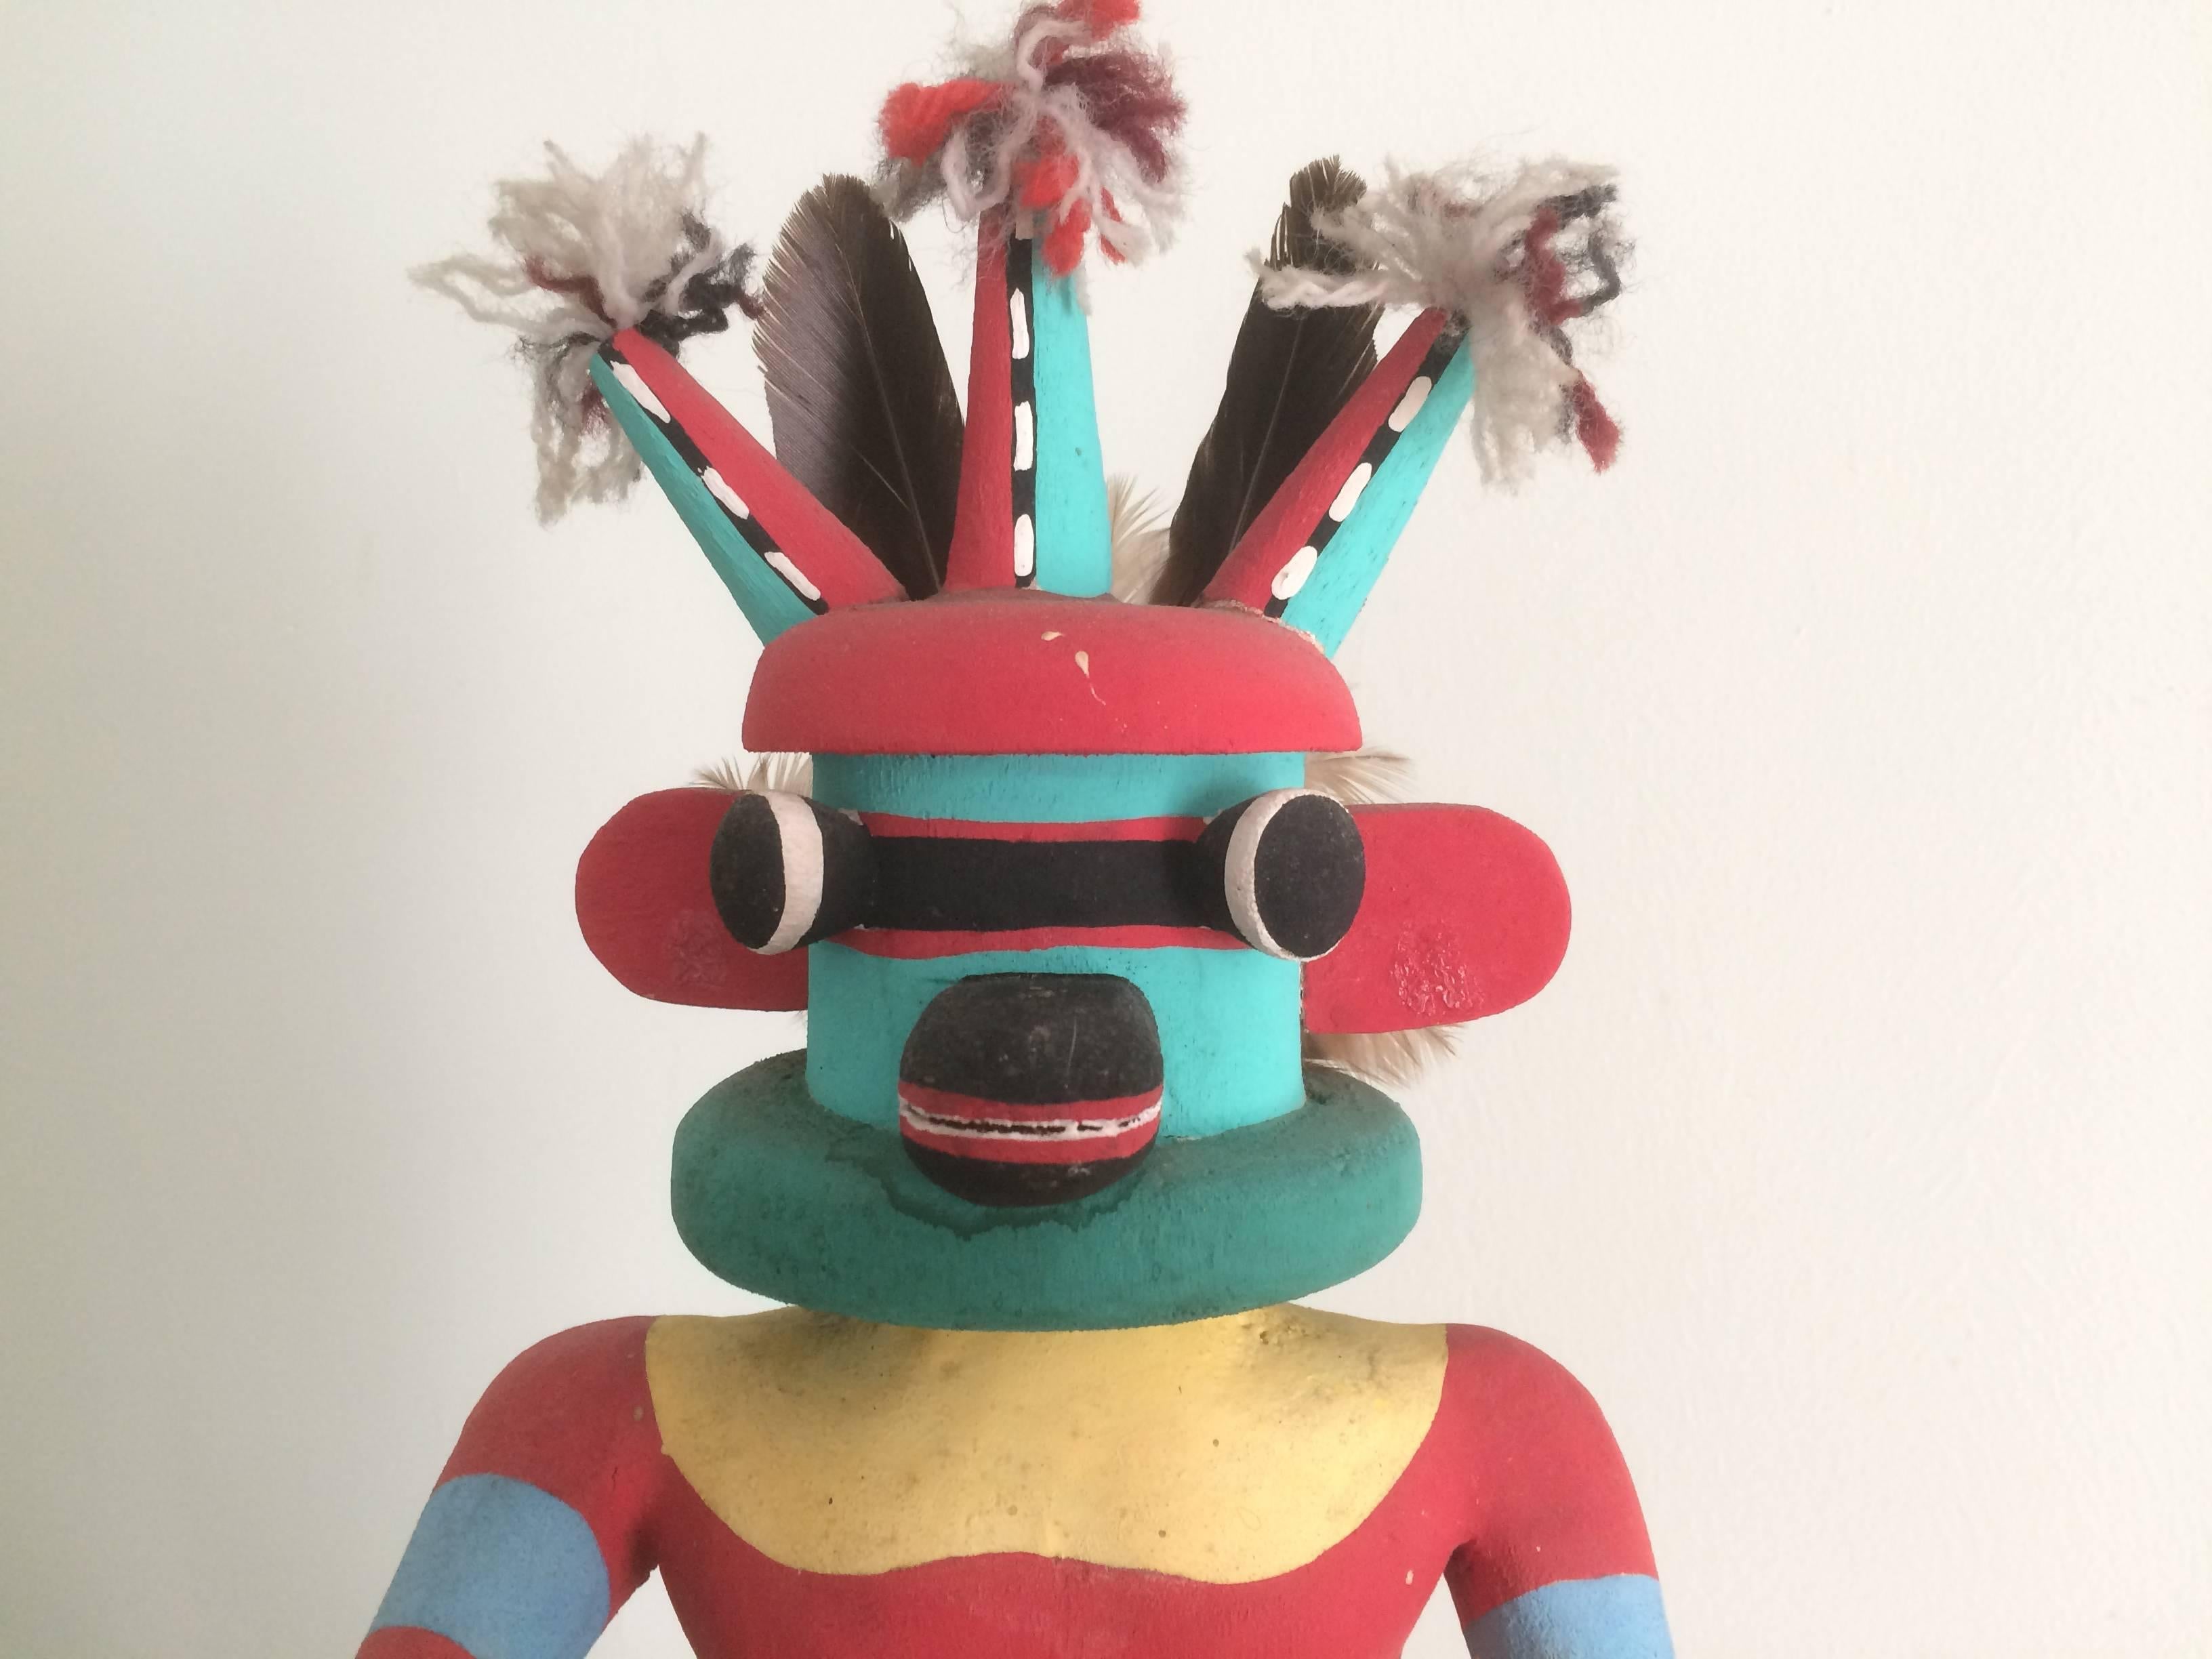  Vinatge hand painted Kachina or Katsina doll. Payik Ala (Three-Horned Kachina) - a Warrior Kachina, a guard representing swiftness and action. 